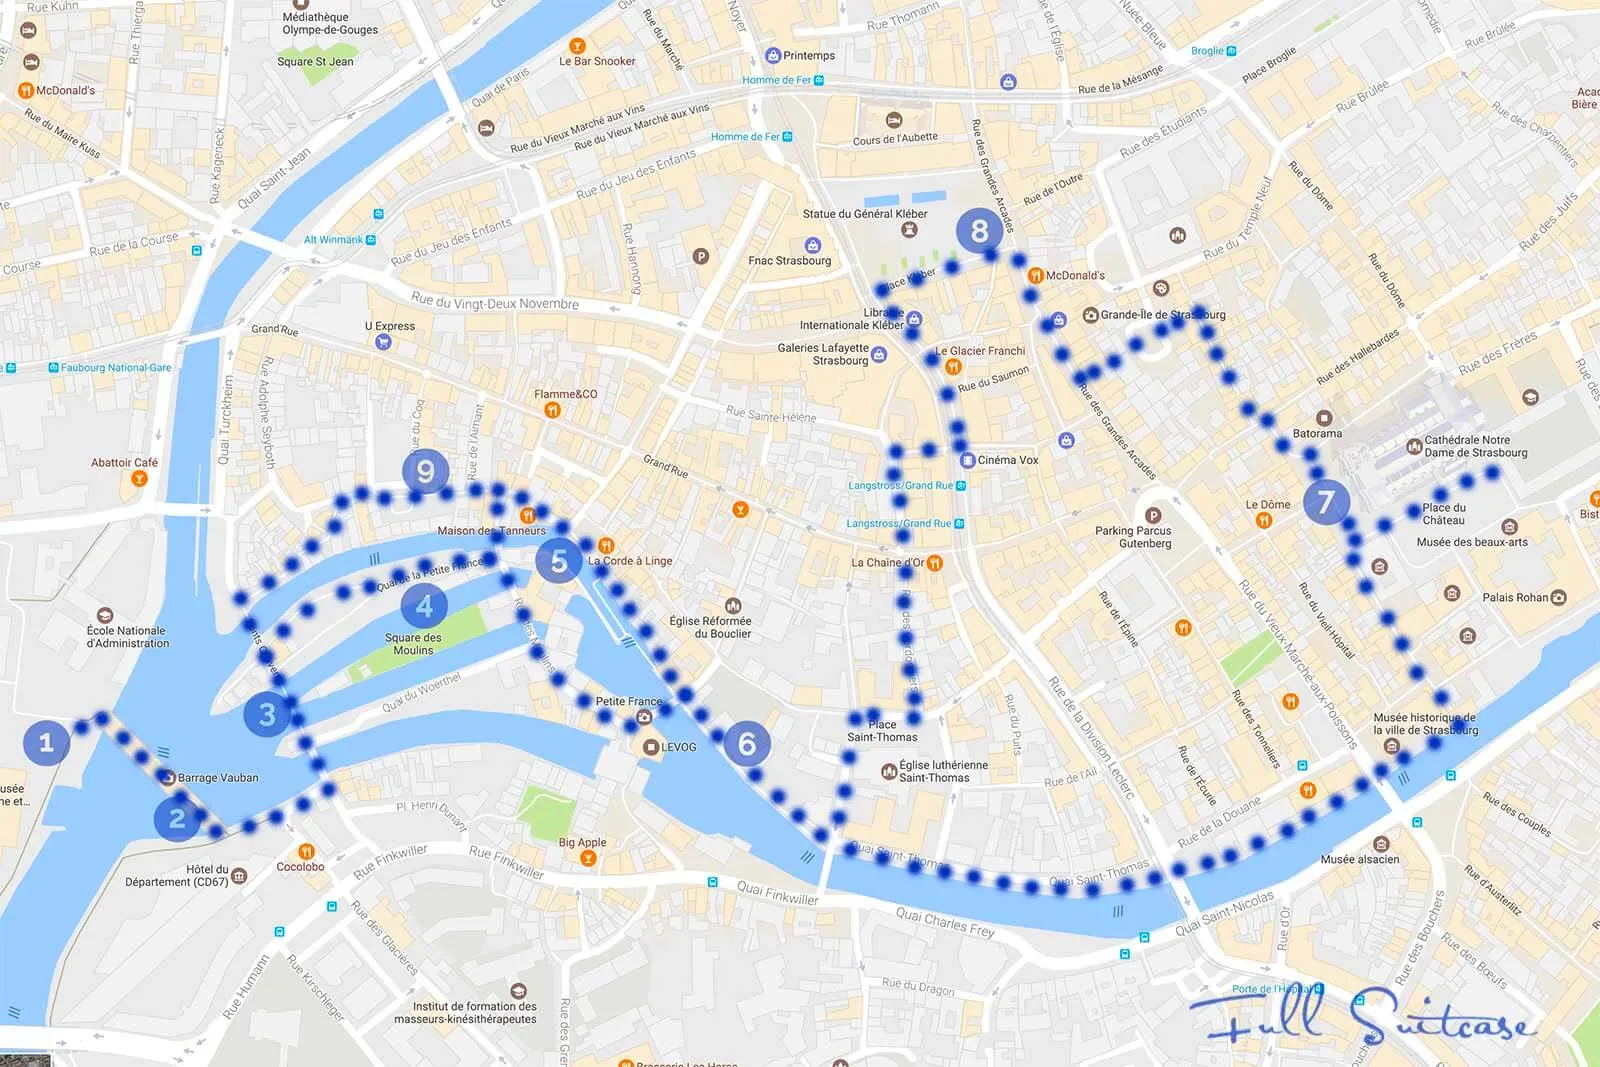 Strasbourg city centre walking map